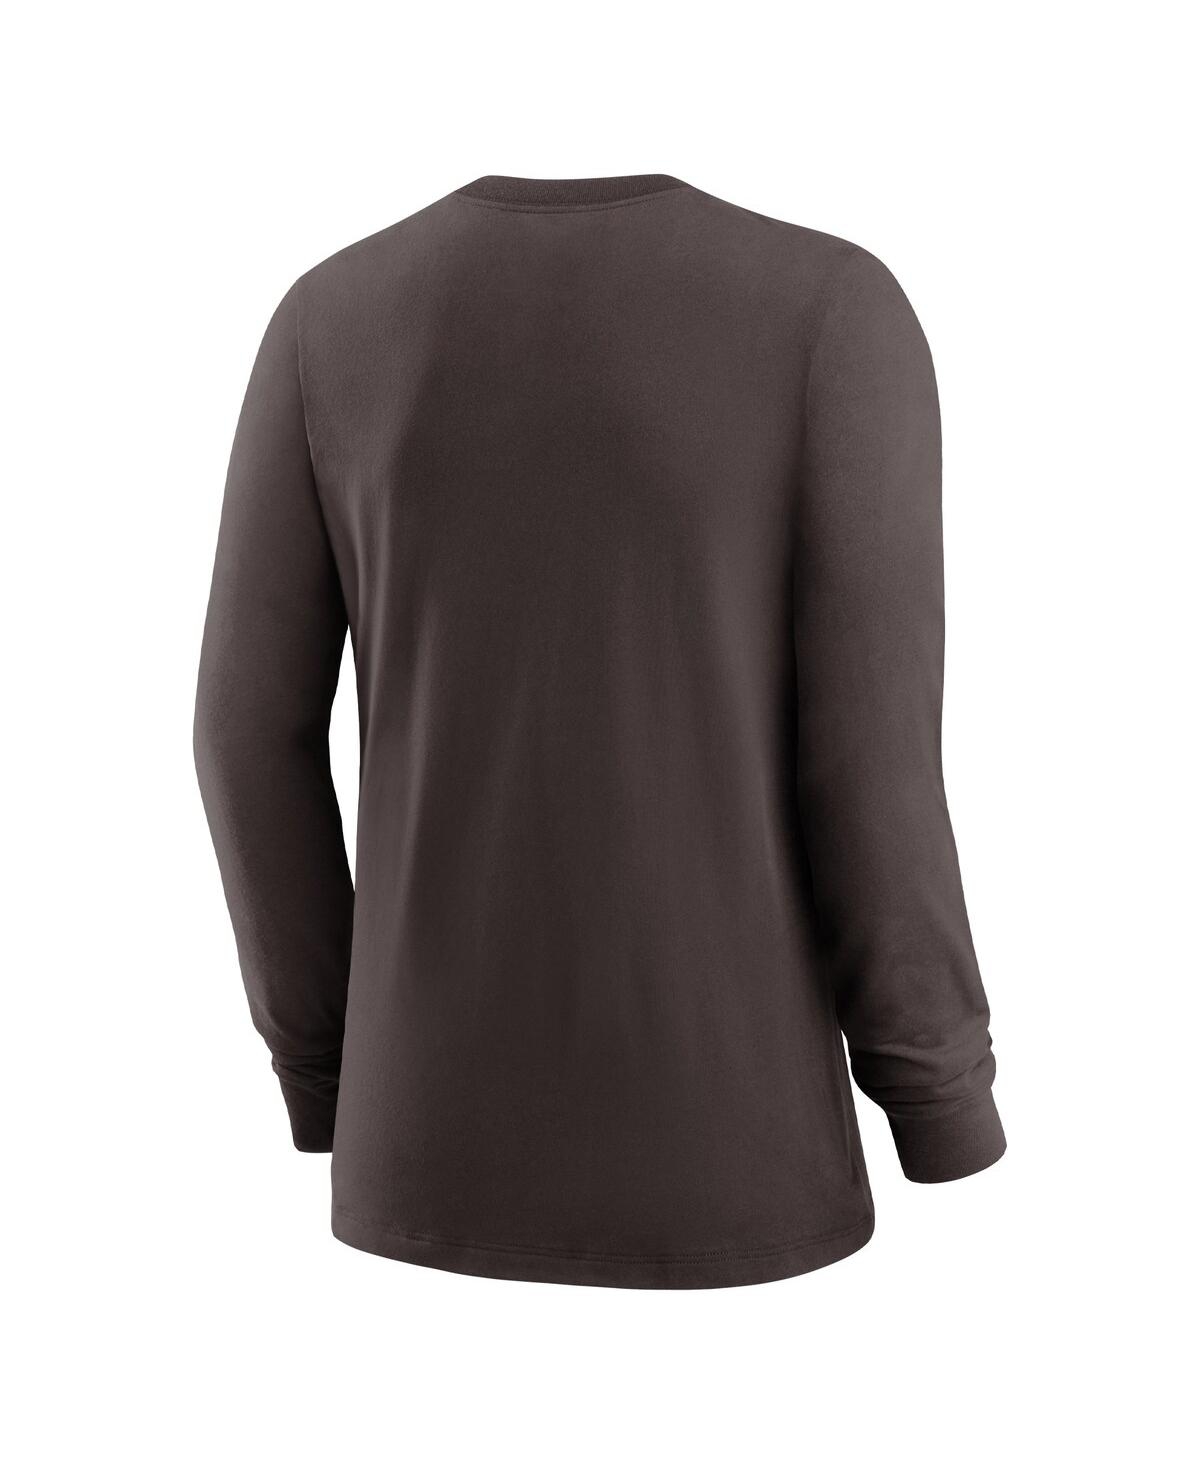 Shop Nike Women's  Brown Cleveland Browns Prime Split Long Sleeve T-shirt